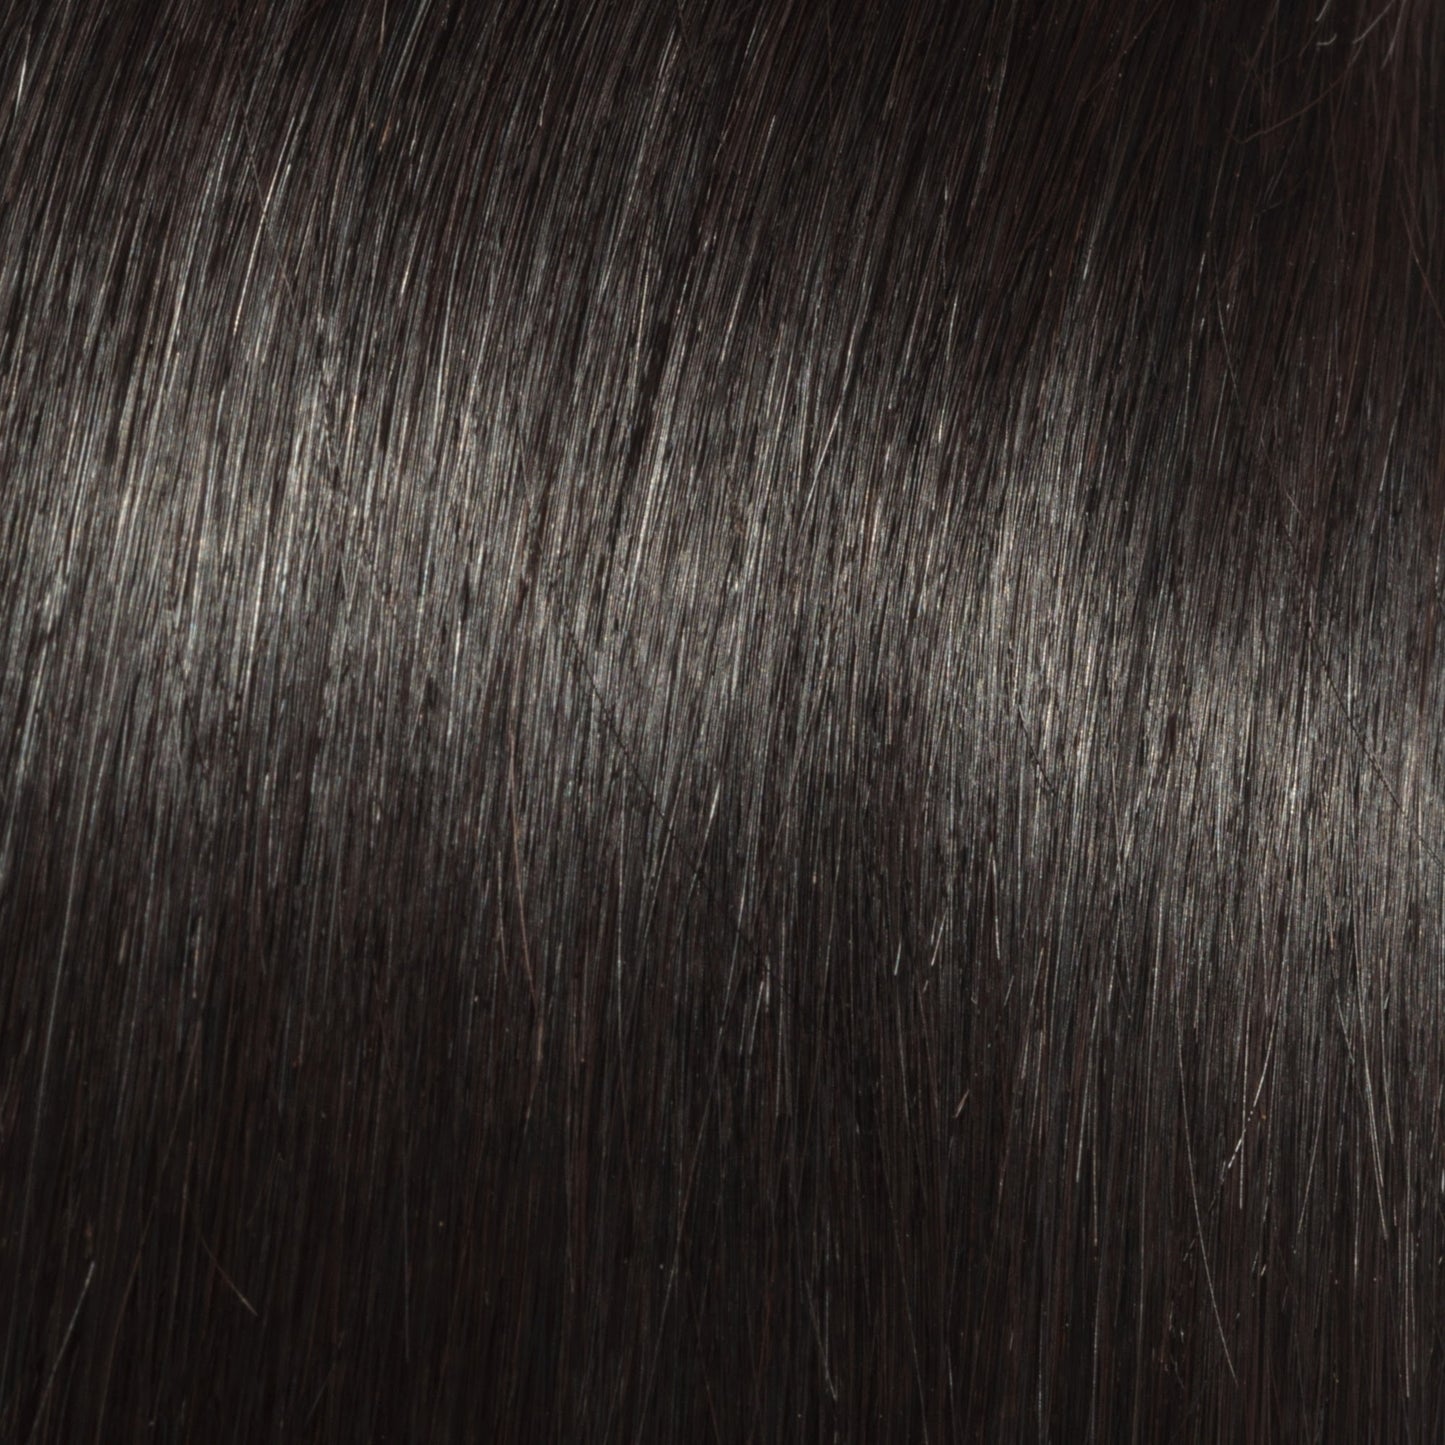 Affordable 3 hair bundle deal in silky black straight hair bundles sold by SL Raw Virgin hair